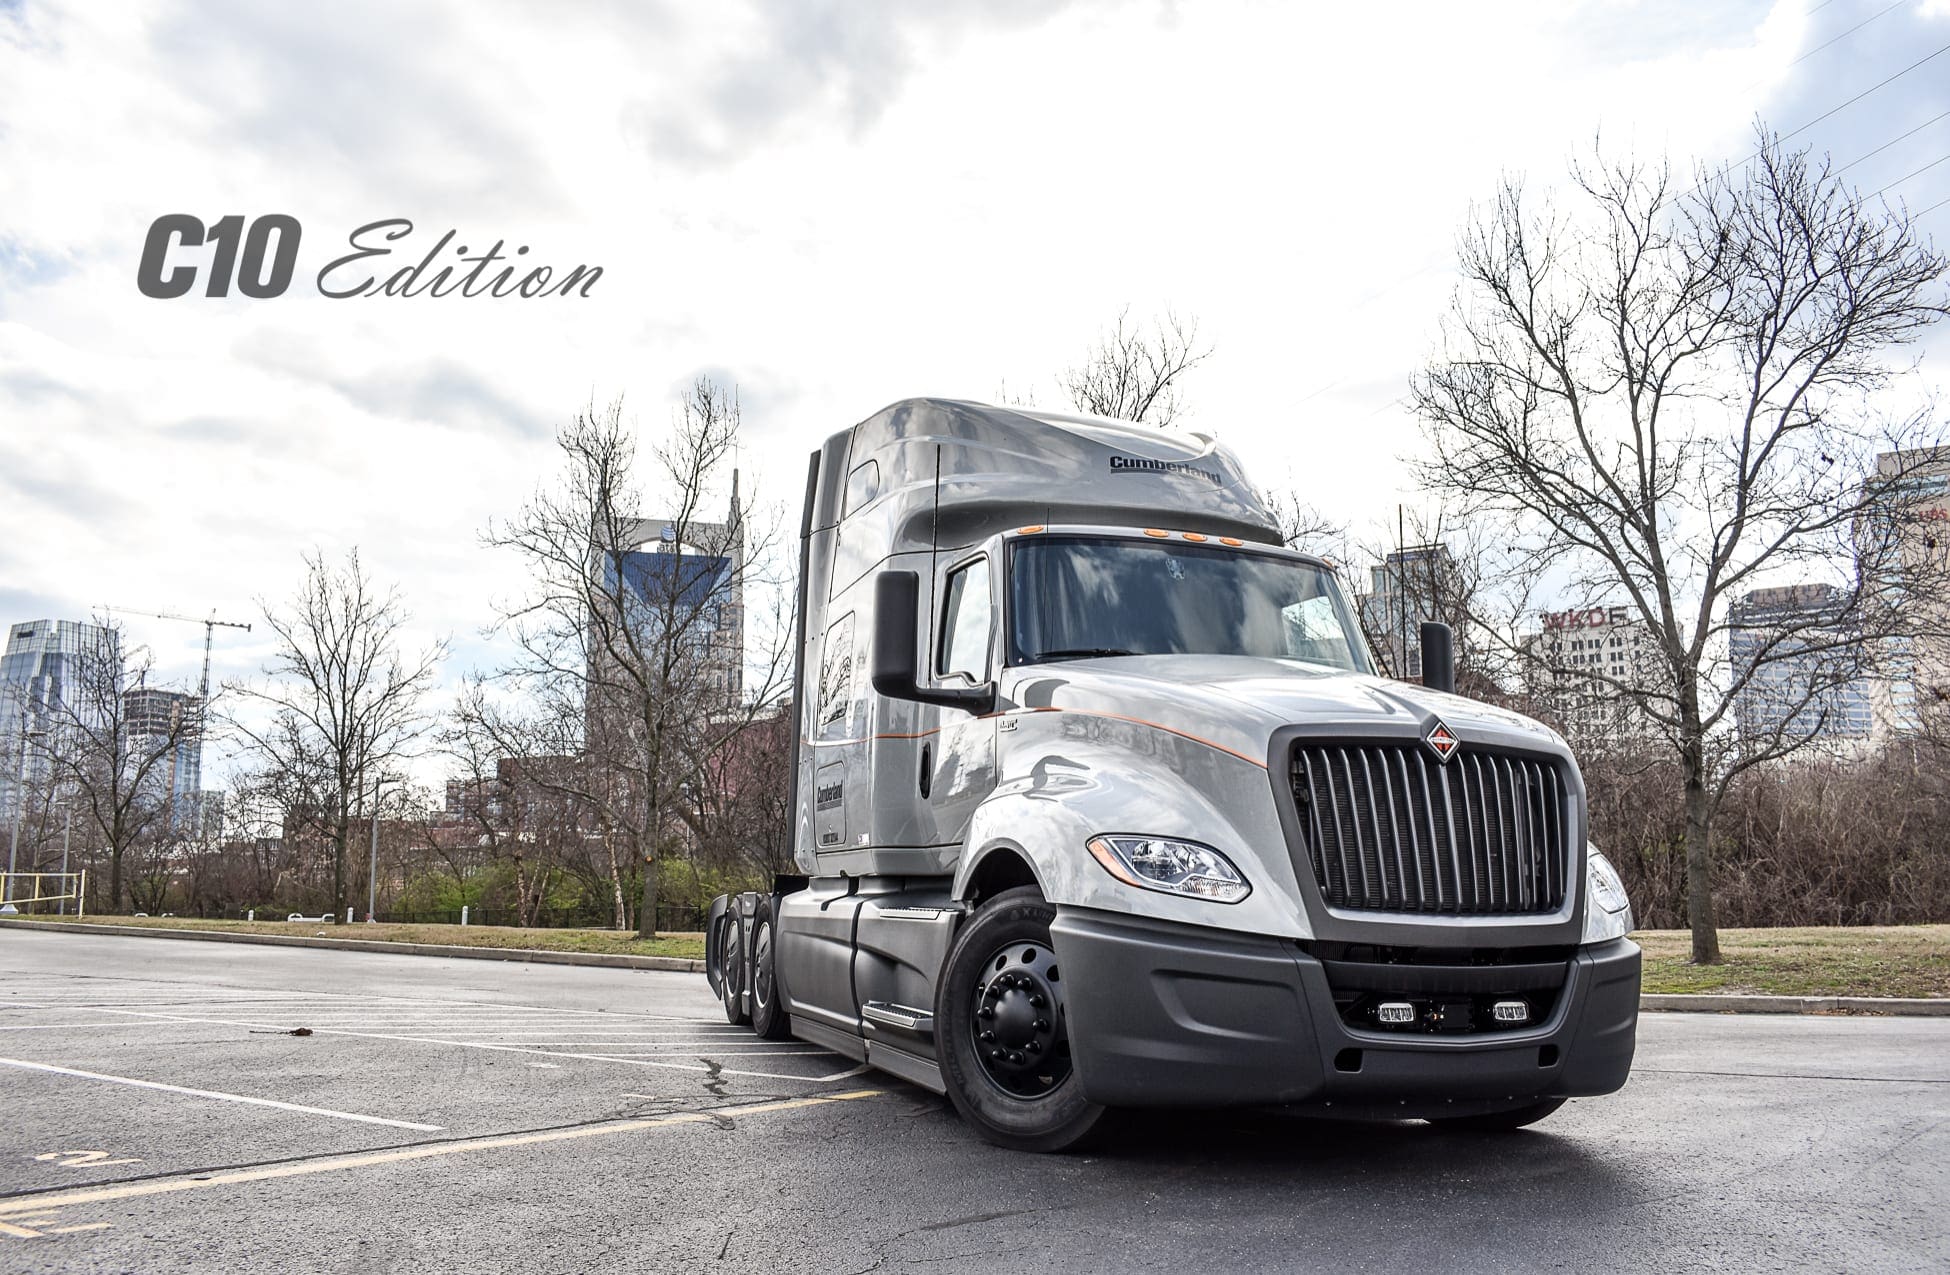 Nashville, TN Cumberland International Truck Dealership's Next Generation C10 Edition - Fuel Efficient Truck